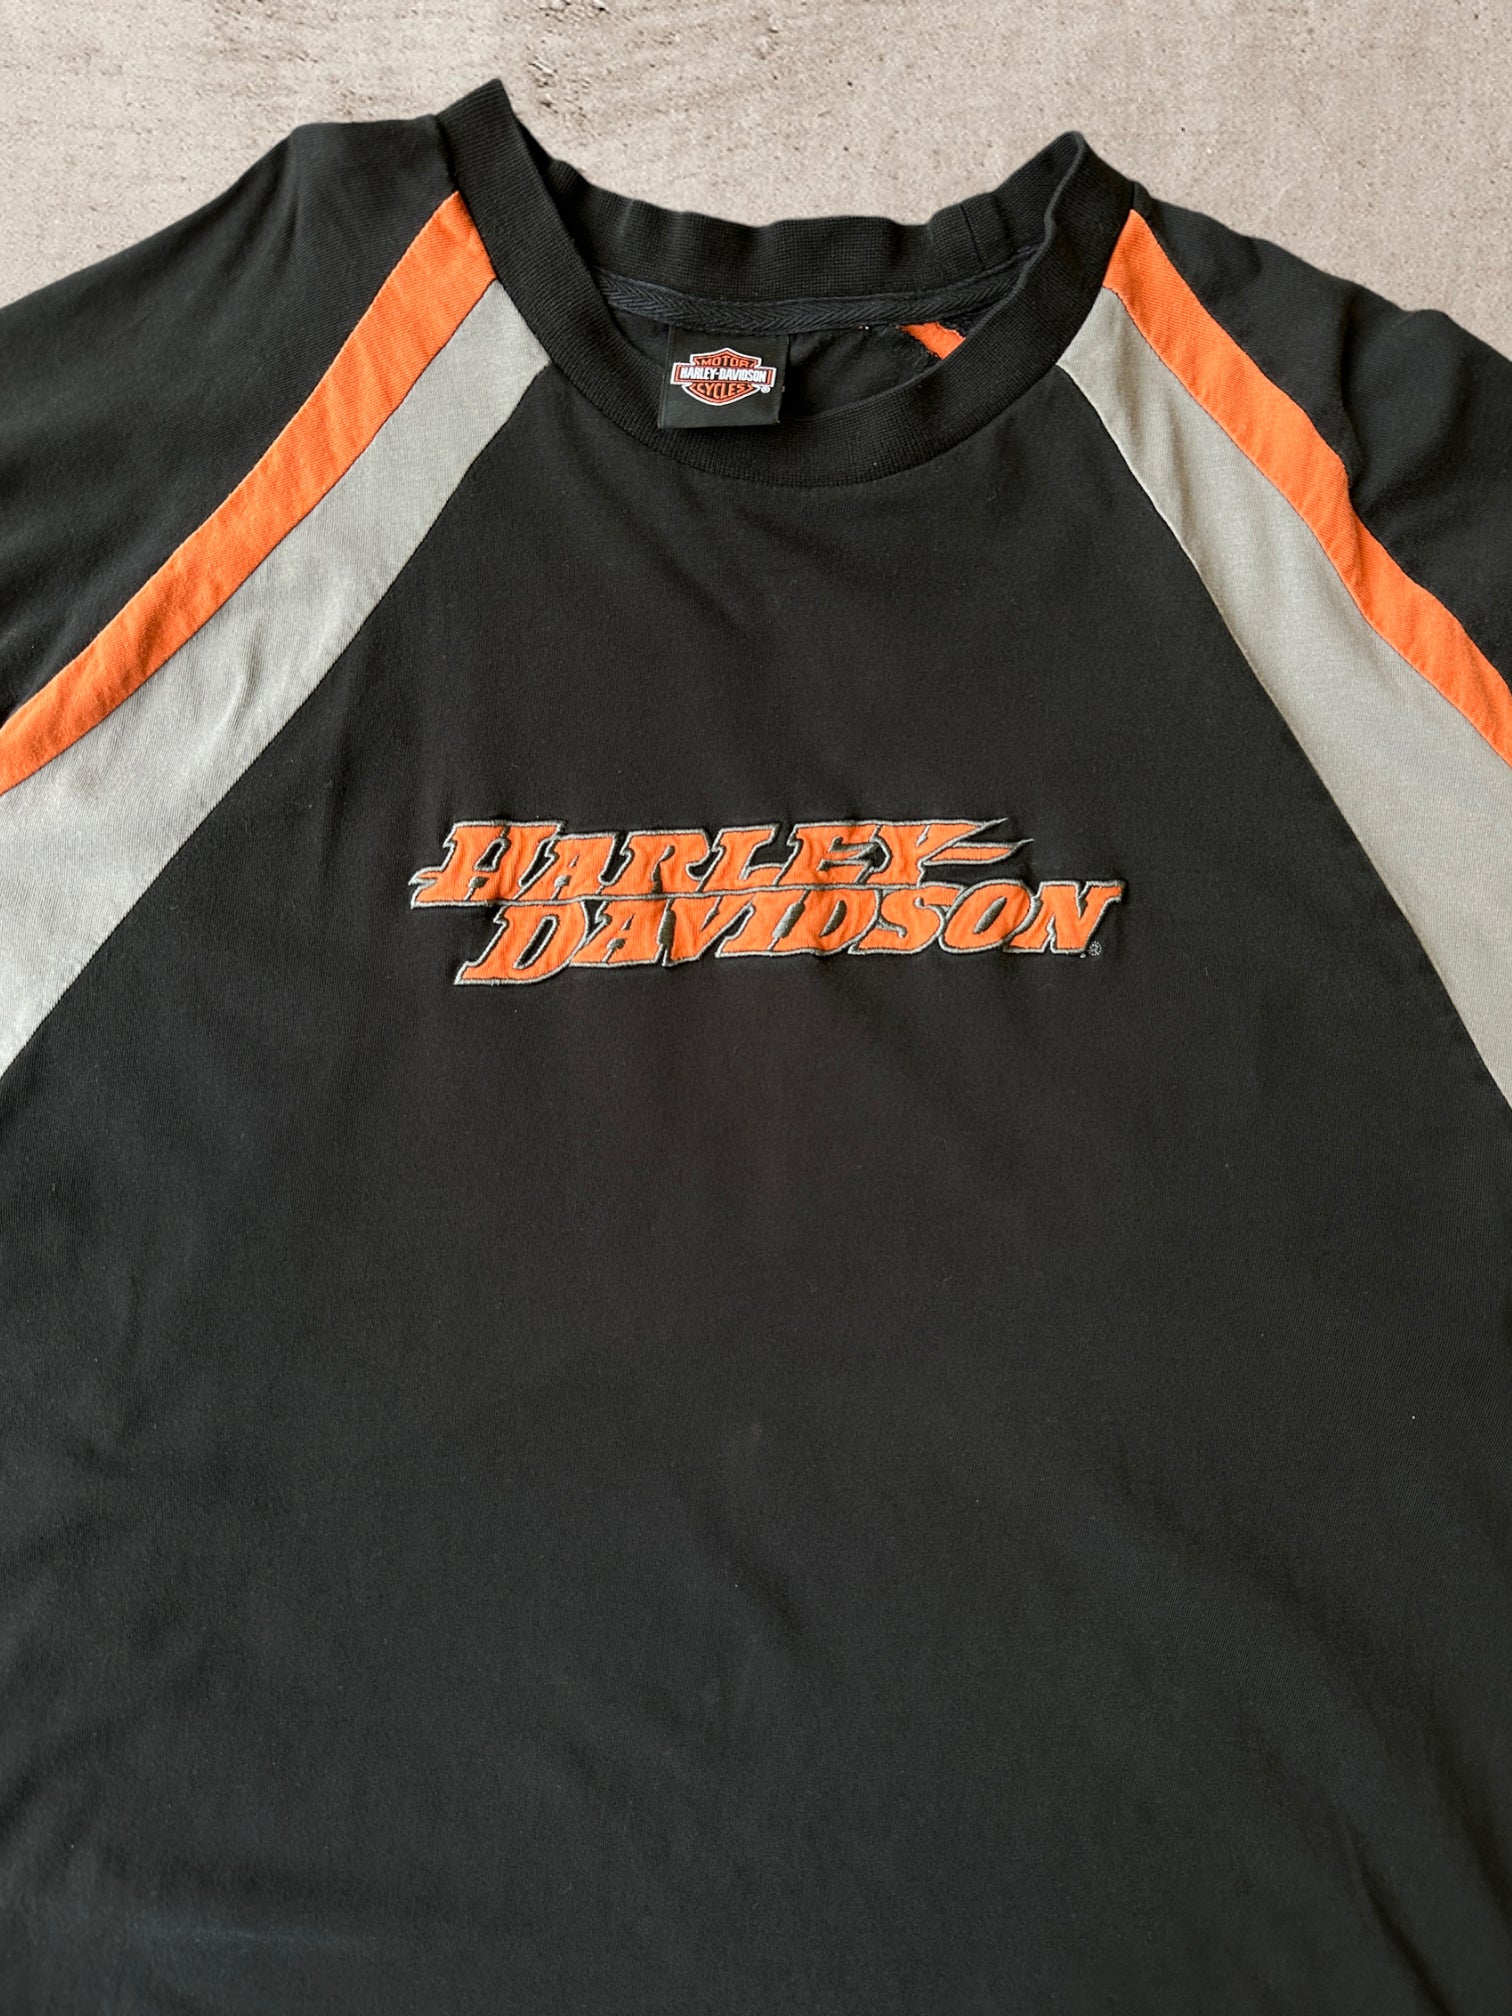 Vintage Harley Davidson Long Sleeve T-Shirt - XXL